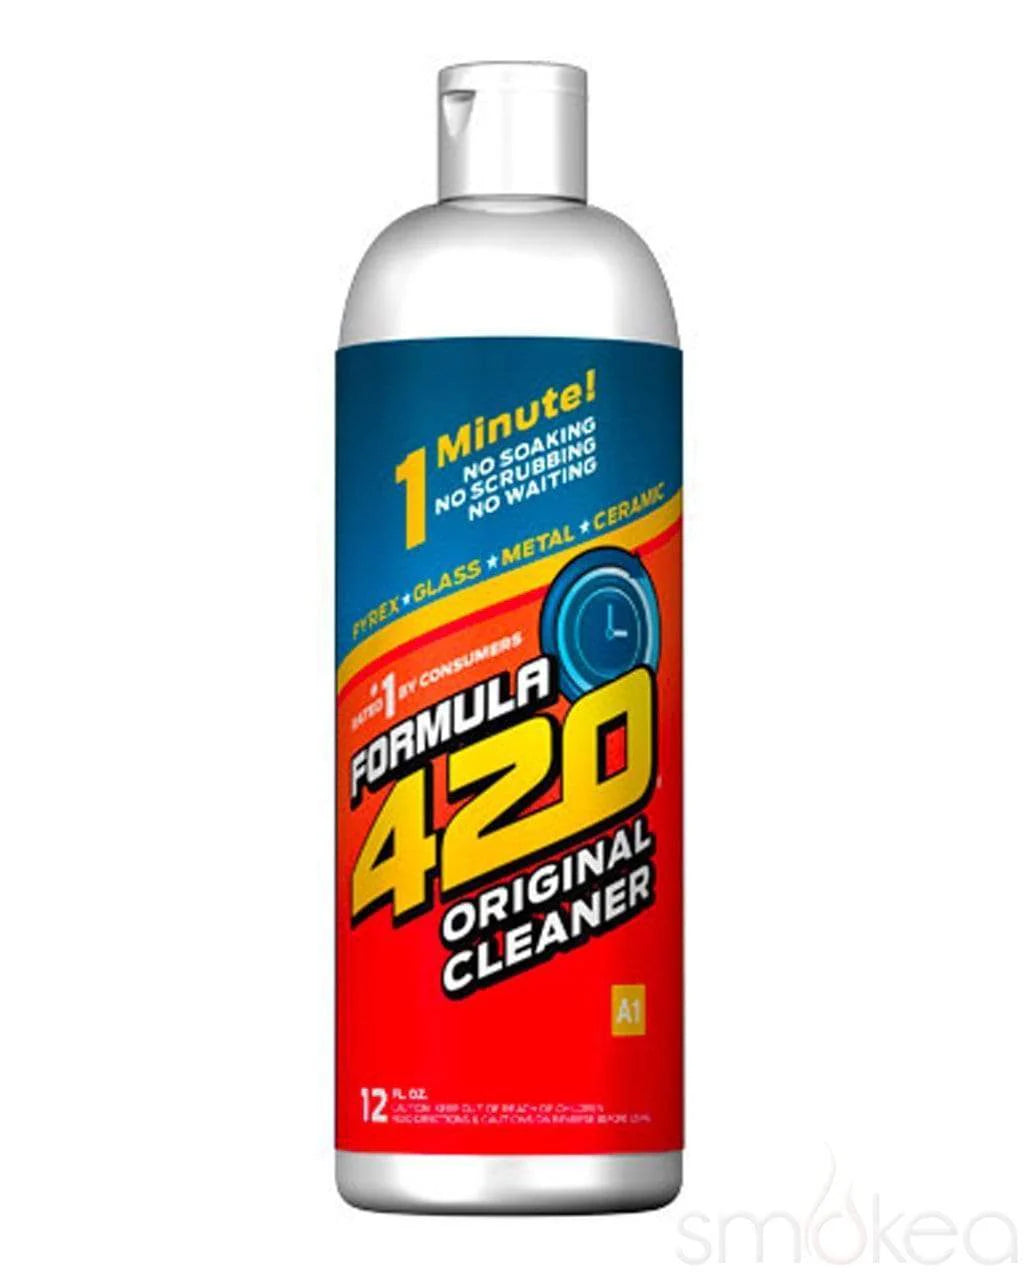 FORMULA 420 ORIGINAL CLEANER | 12OZ